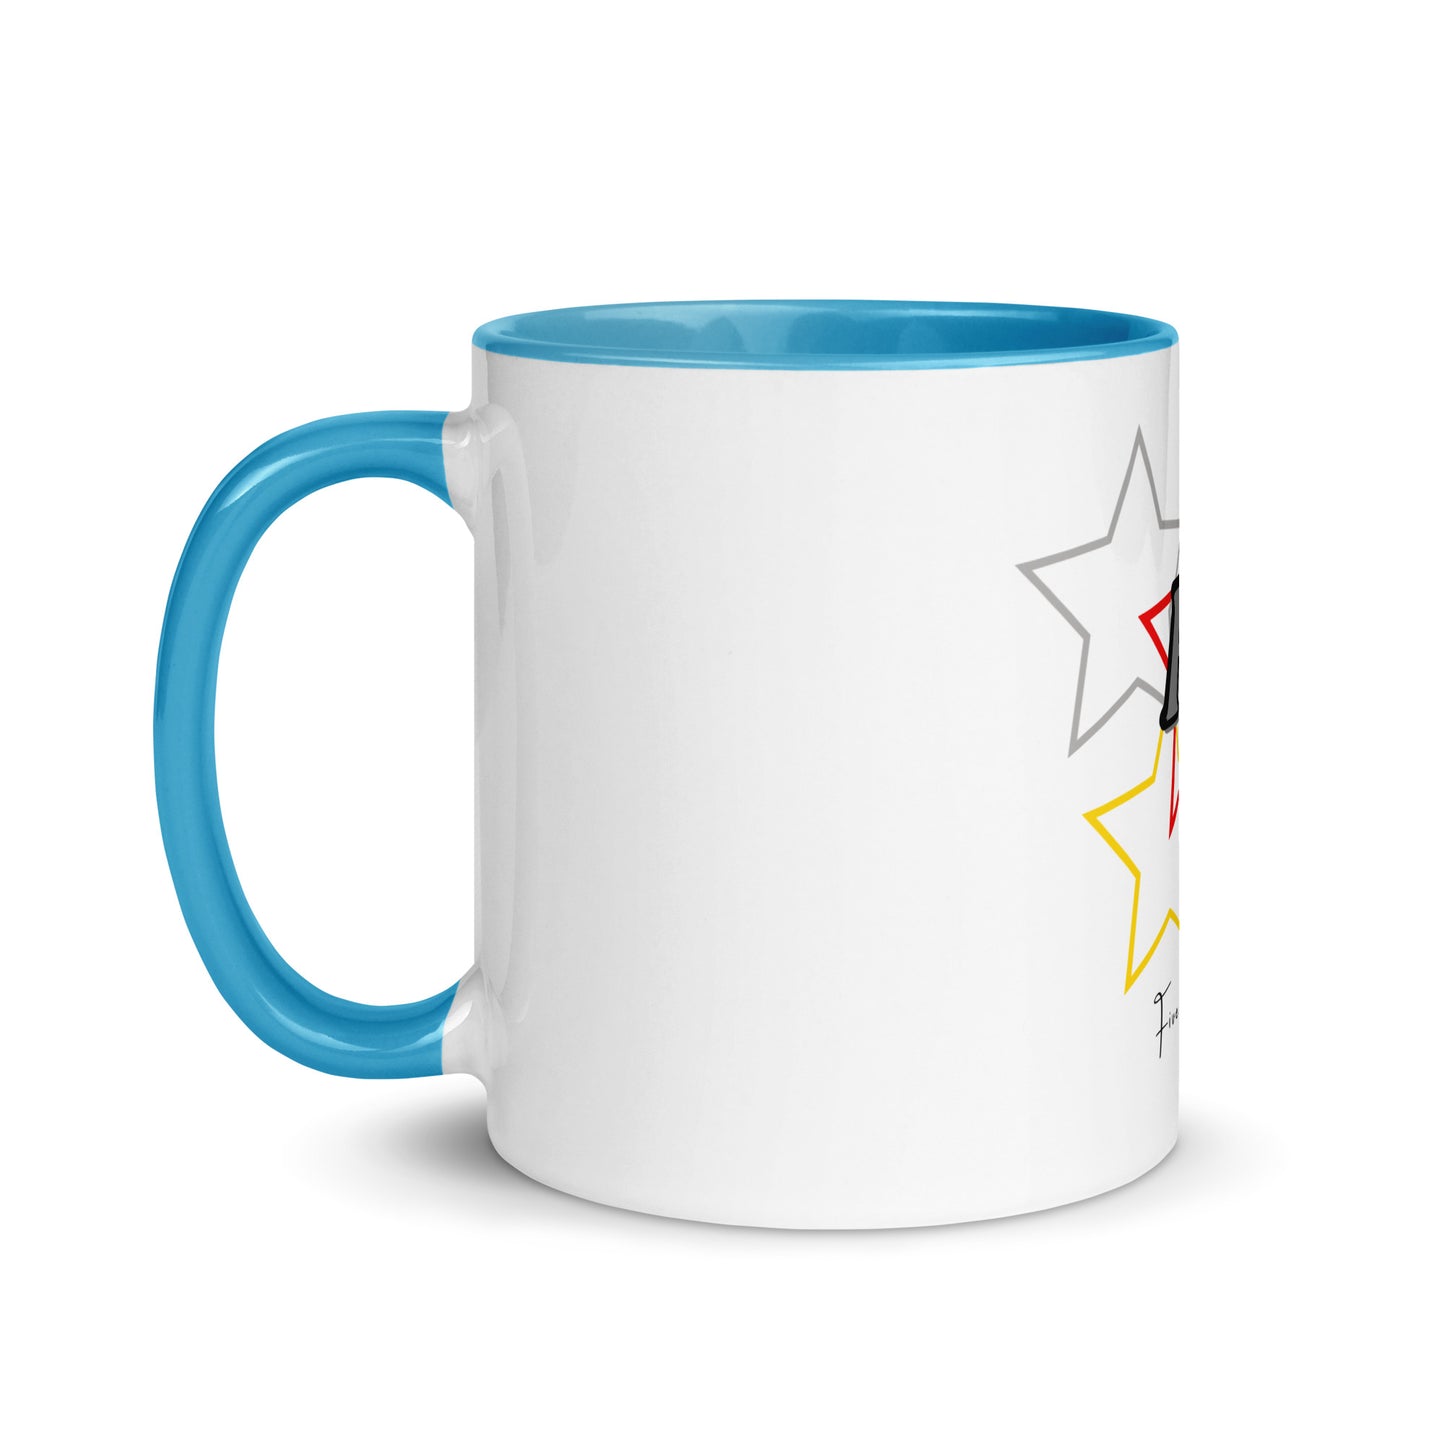 'Starz' Bright - Five Star Fresh Mug with Color Inside